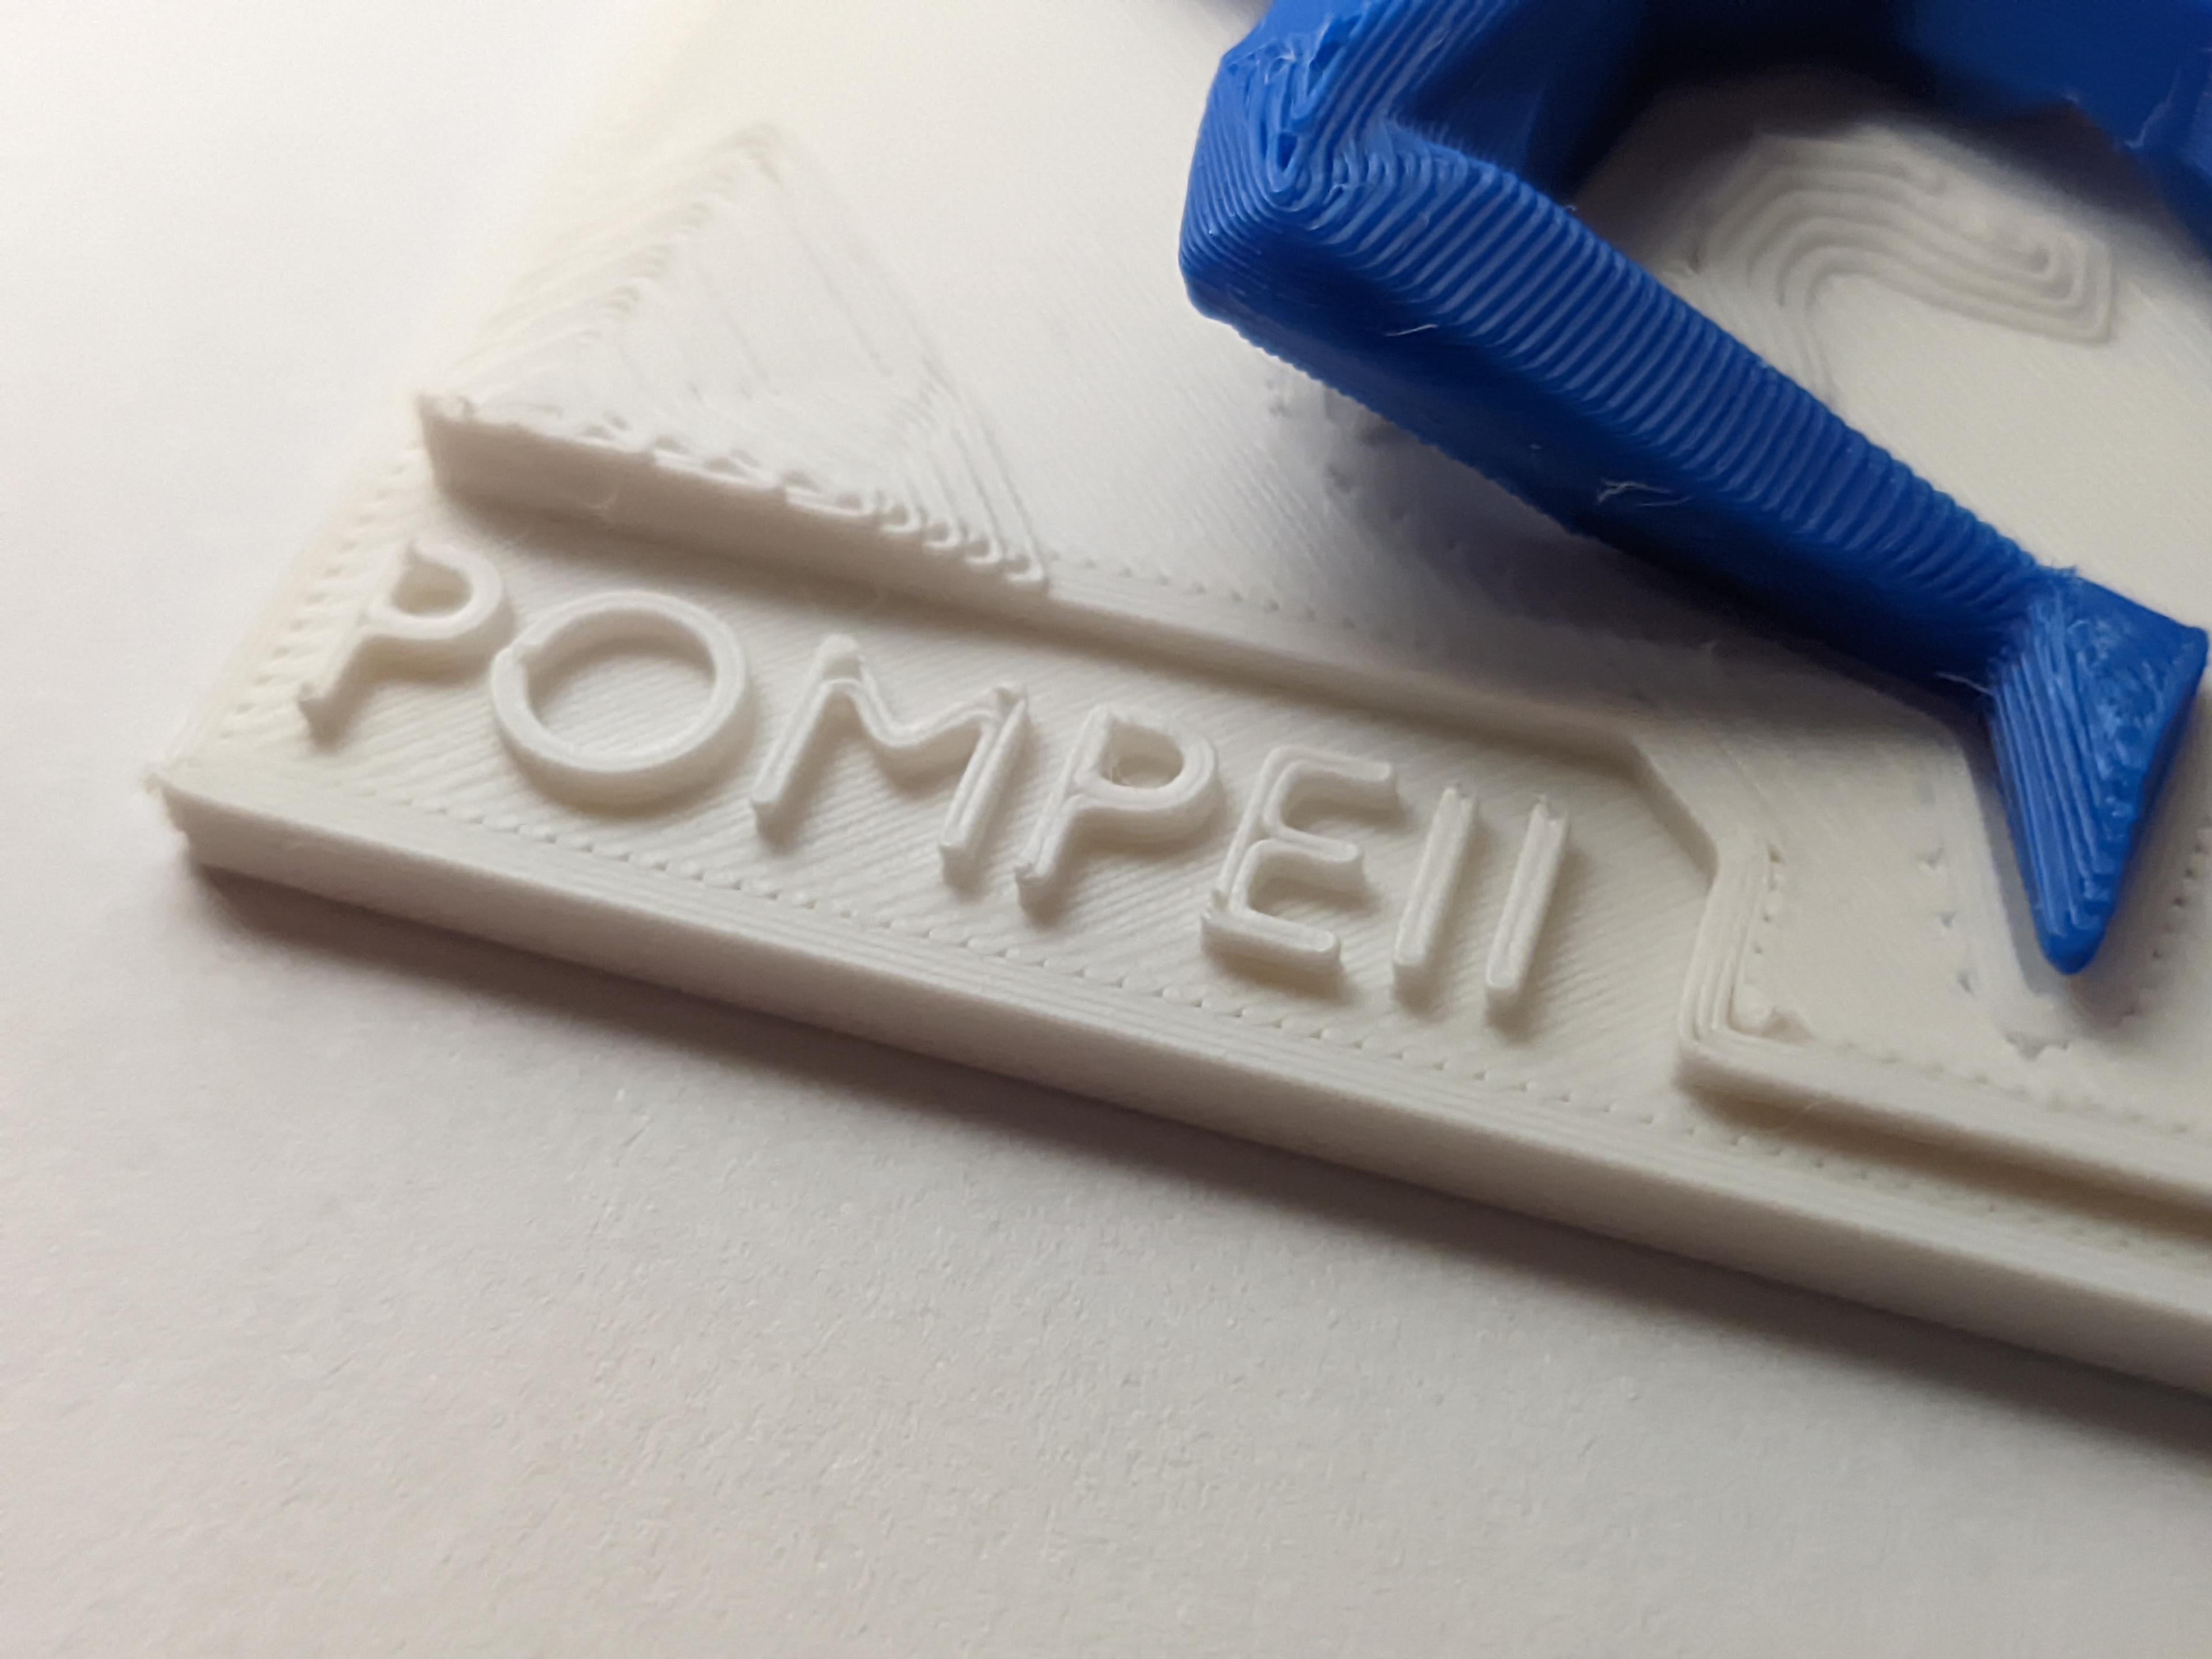 Pompeii Scene [Low-Poly] 3d model